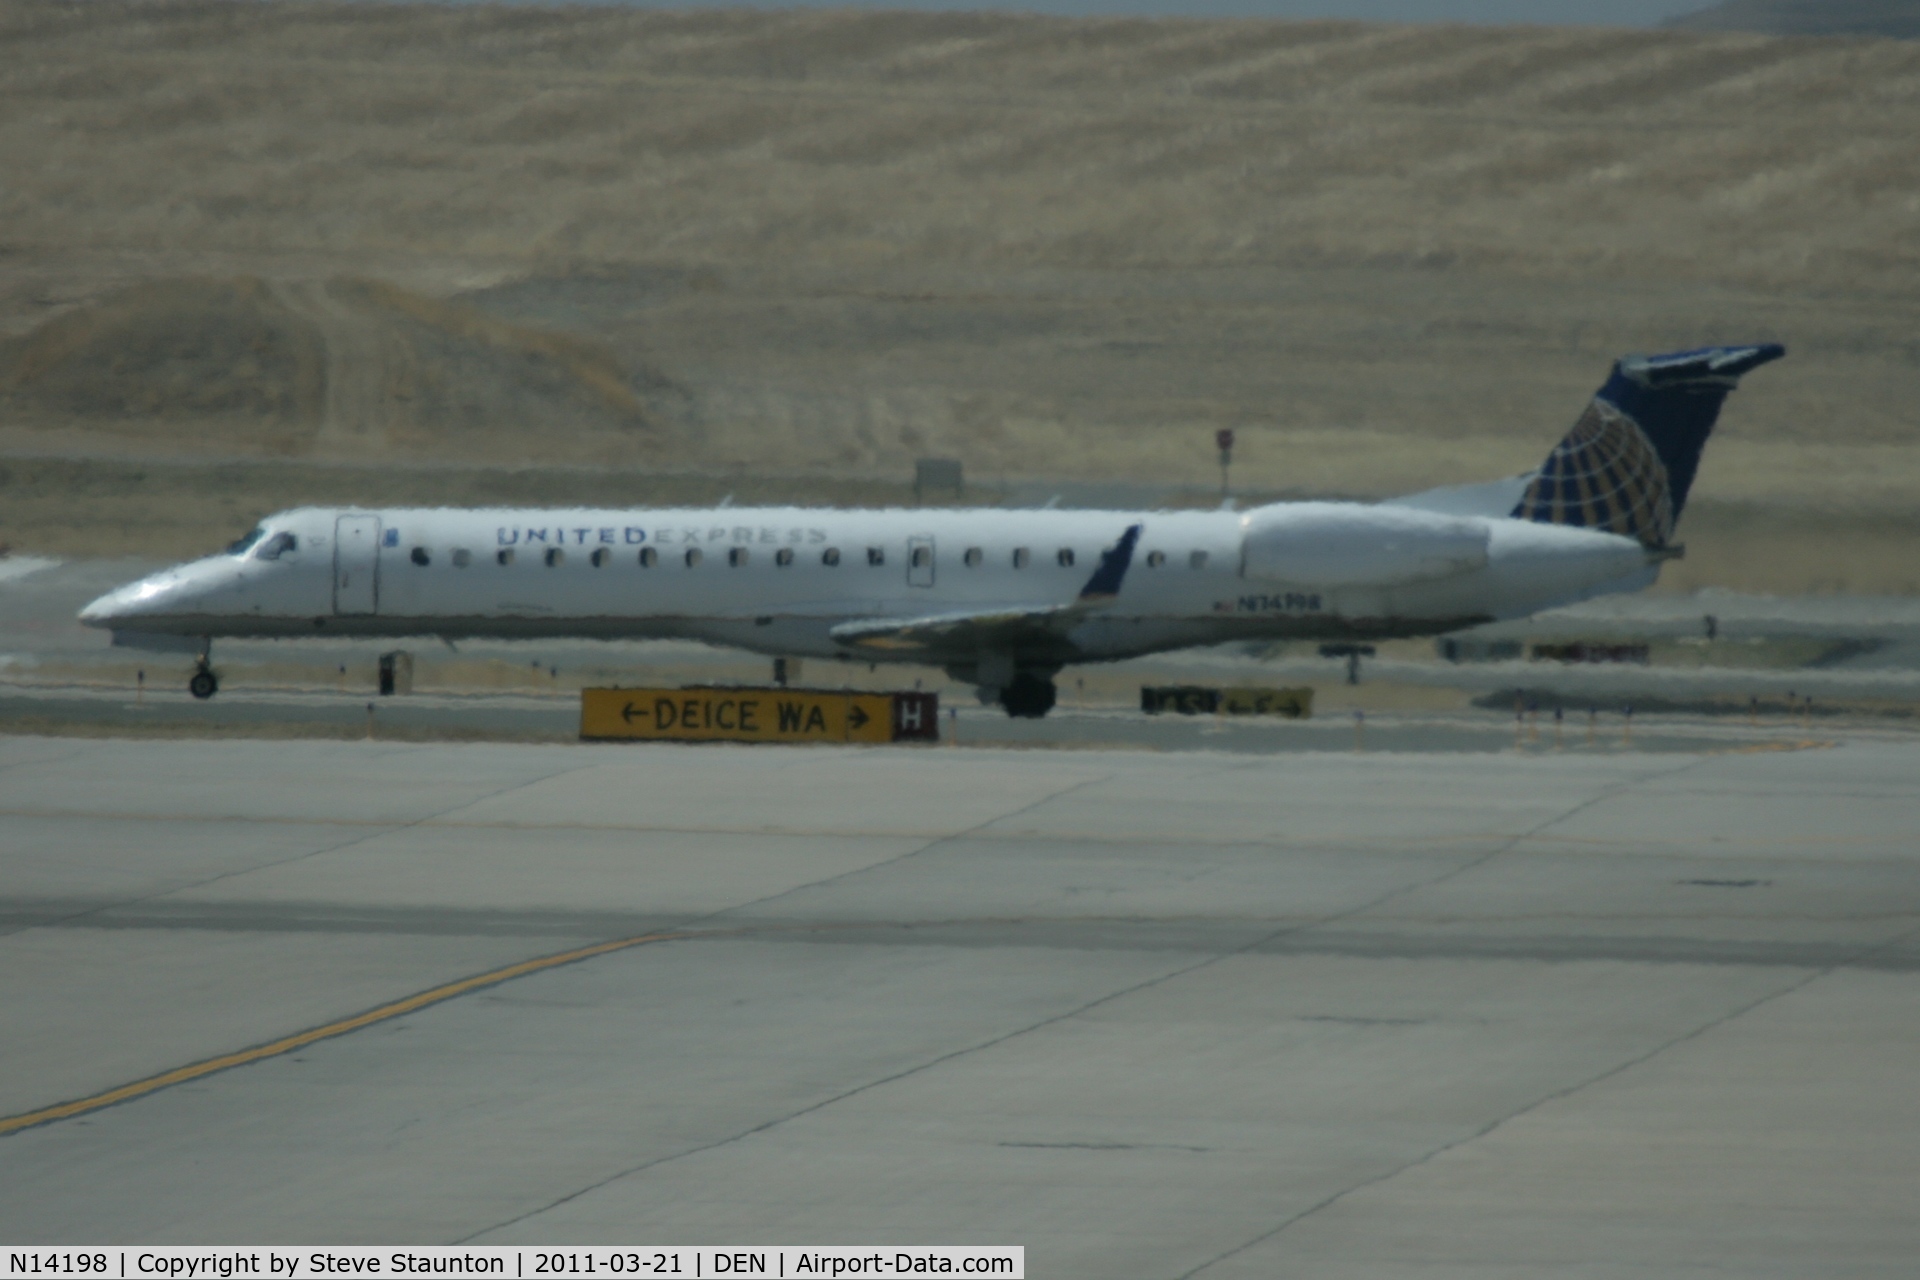 N14198, 2006 Embraer ERJ-145XR (EMB-145XR) C/N 14500951, Taken at Denver International Airport, in March 2011 whilst on an Aeroprint Aviation tour